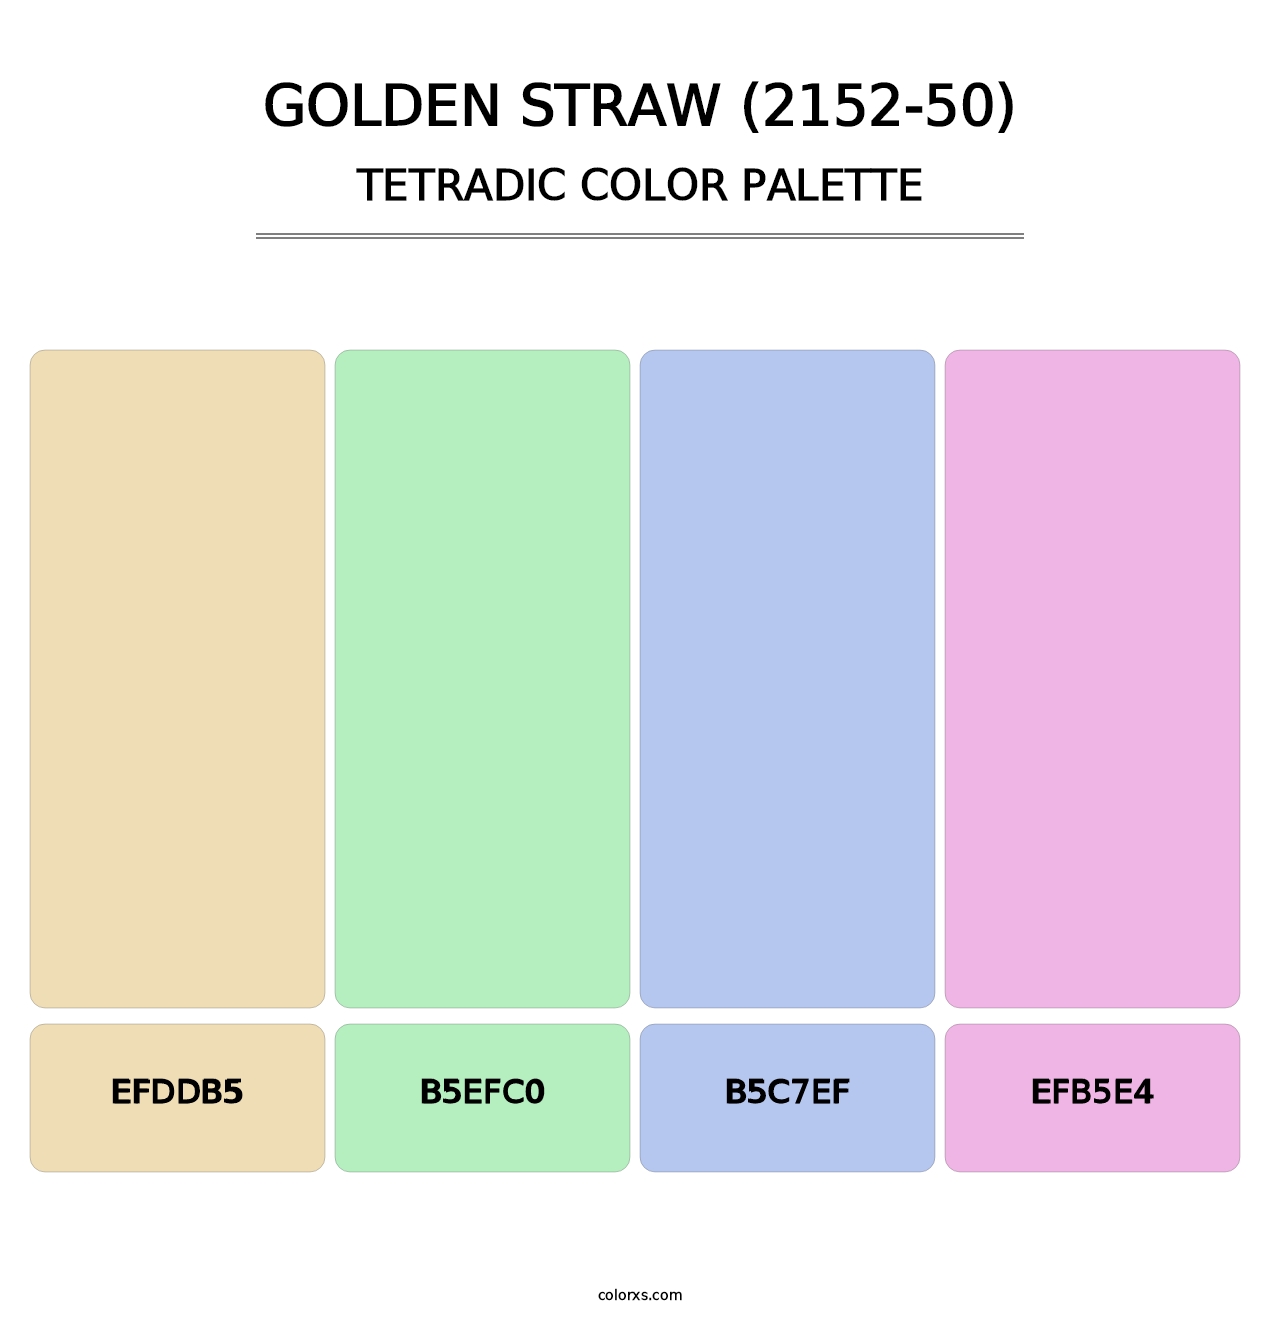 Golden Straw (2152-50) - Tetradic Color Palette